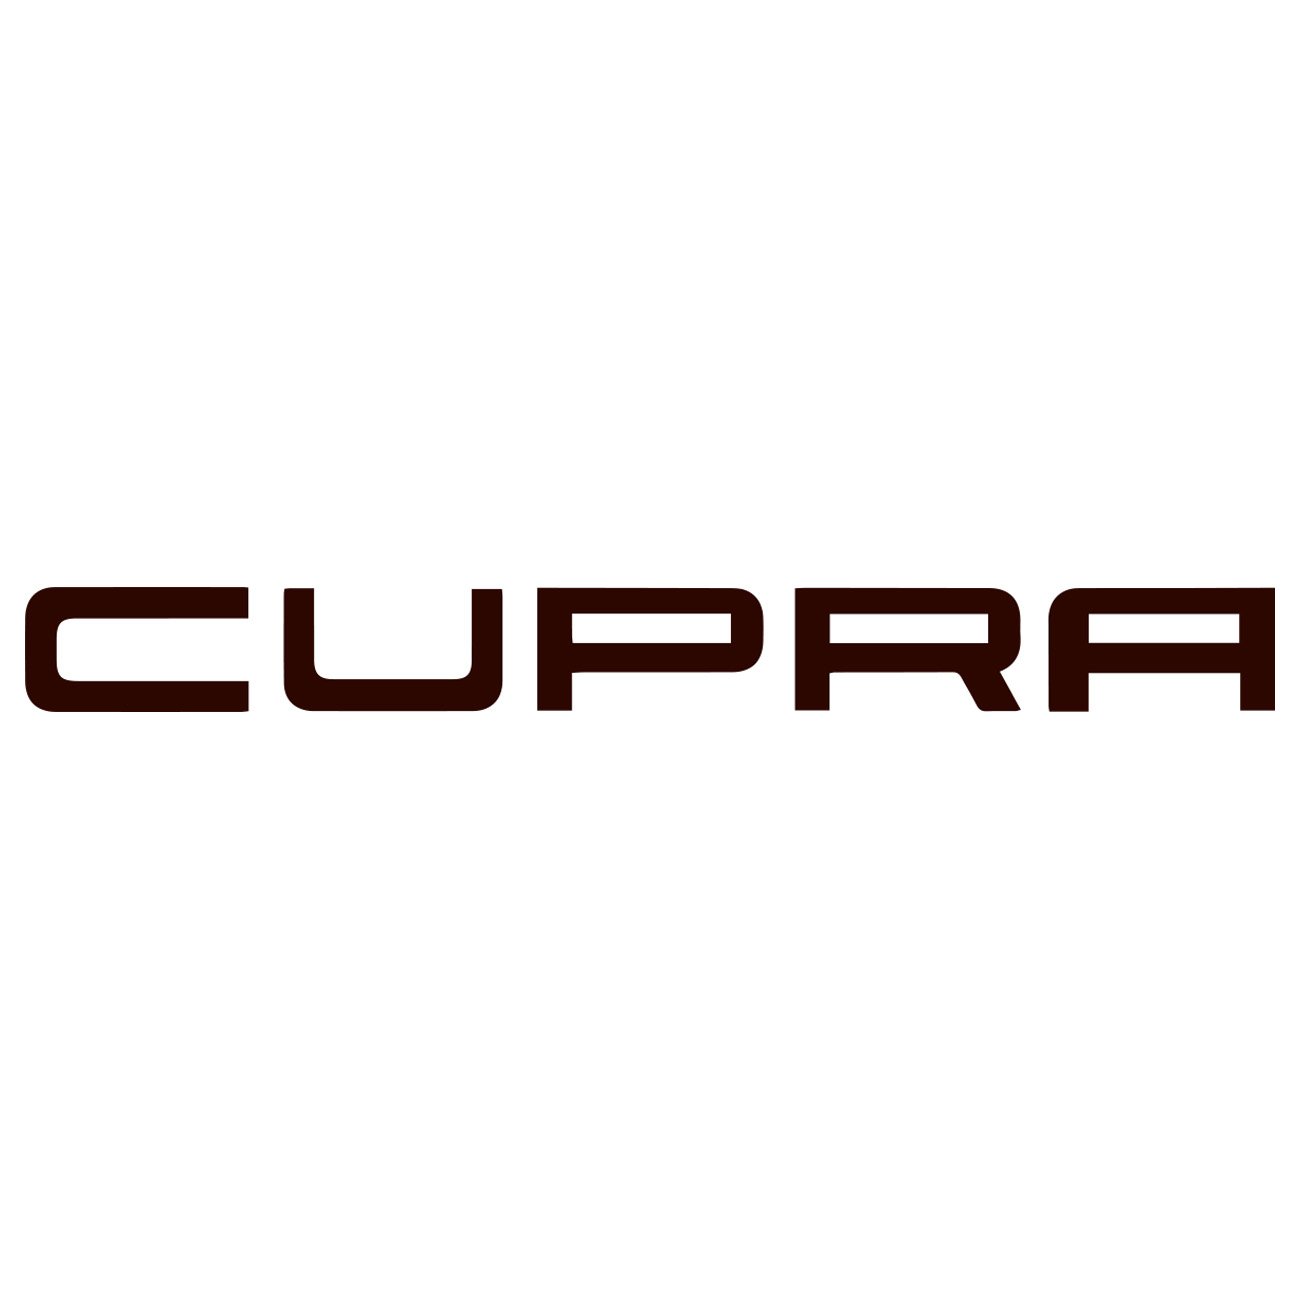 Seat Cupra logo